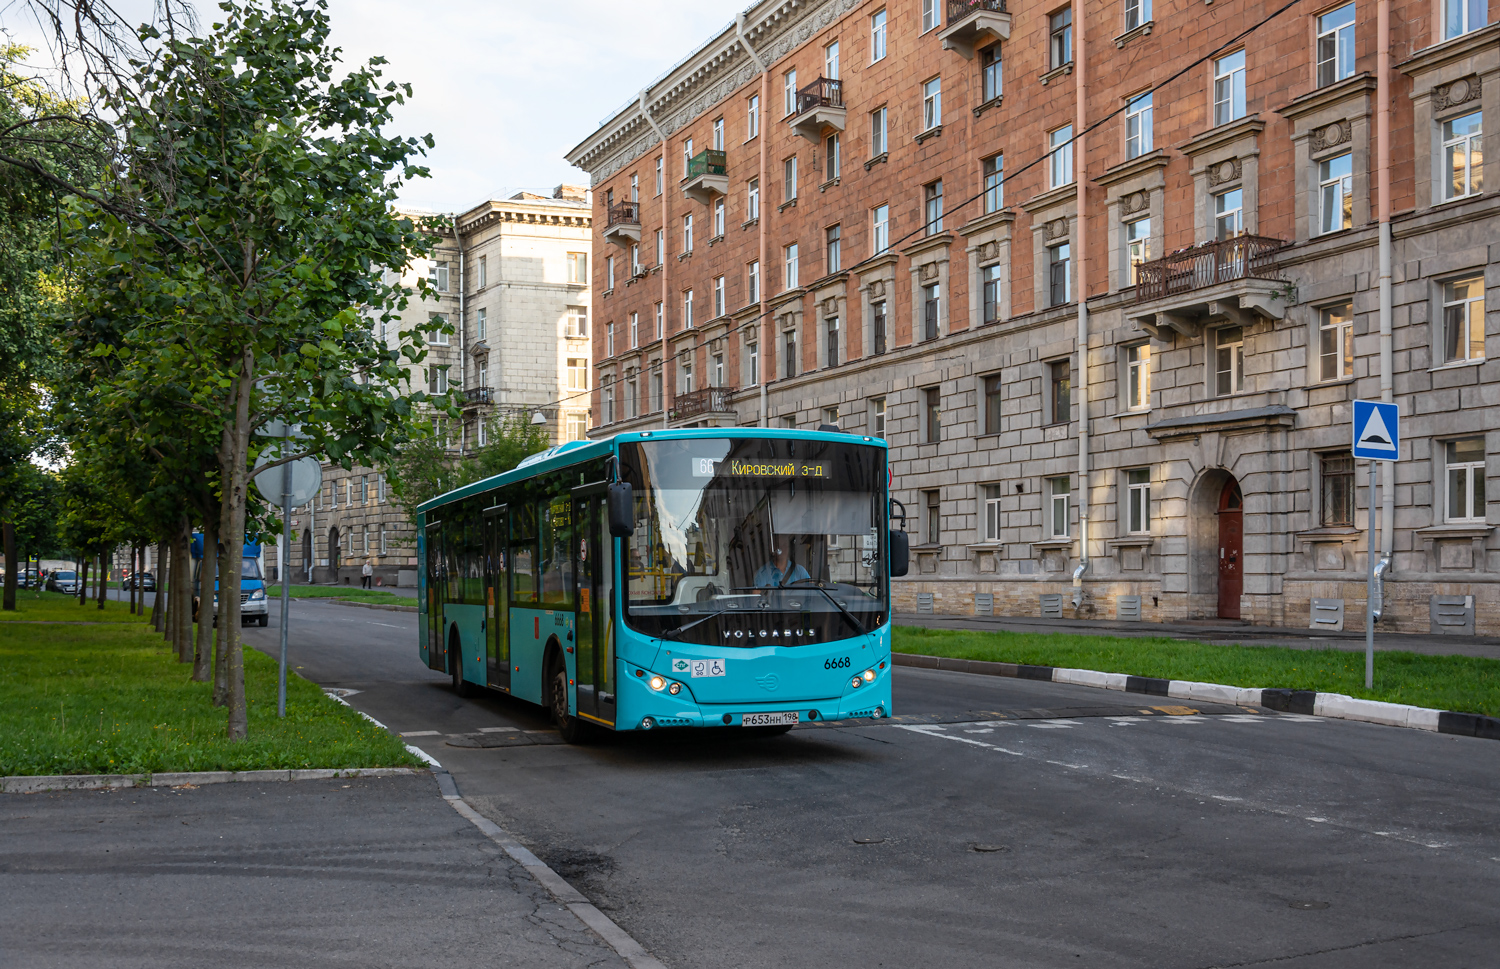 Sankt Petersburg, Volgabus-5270.G4 (LNG) Nr. 6668